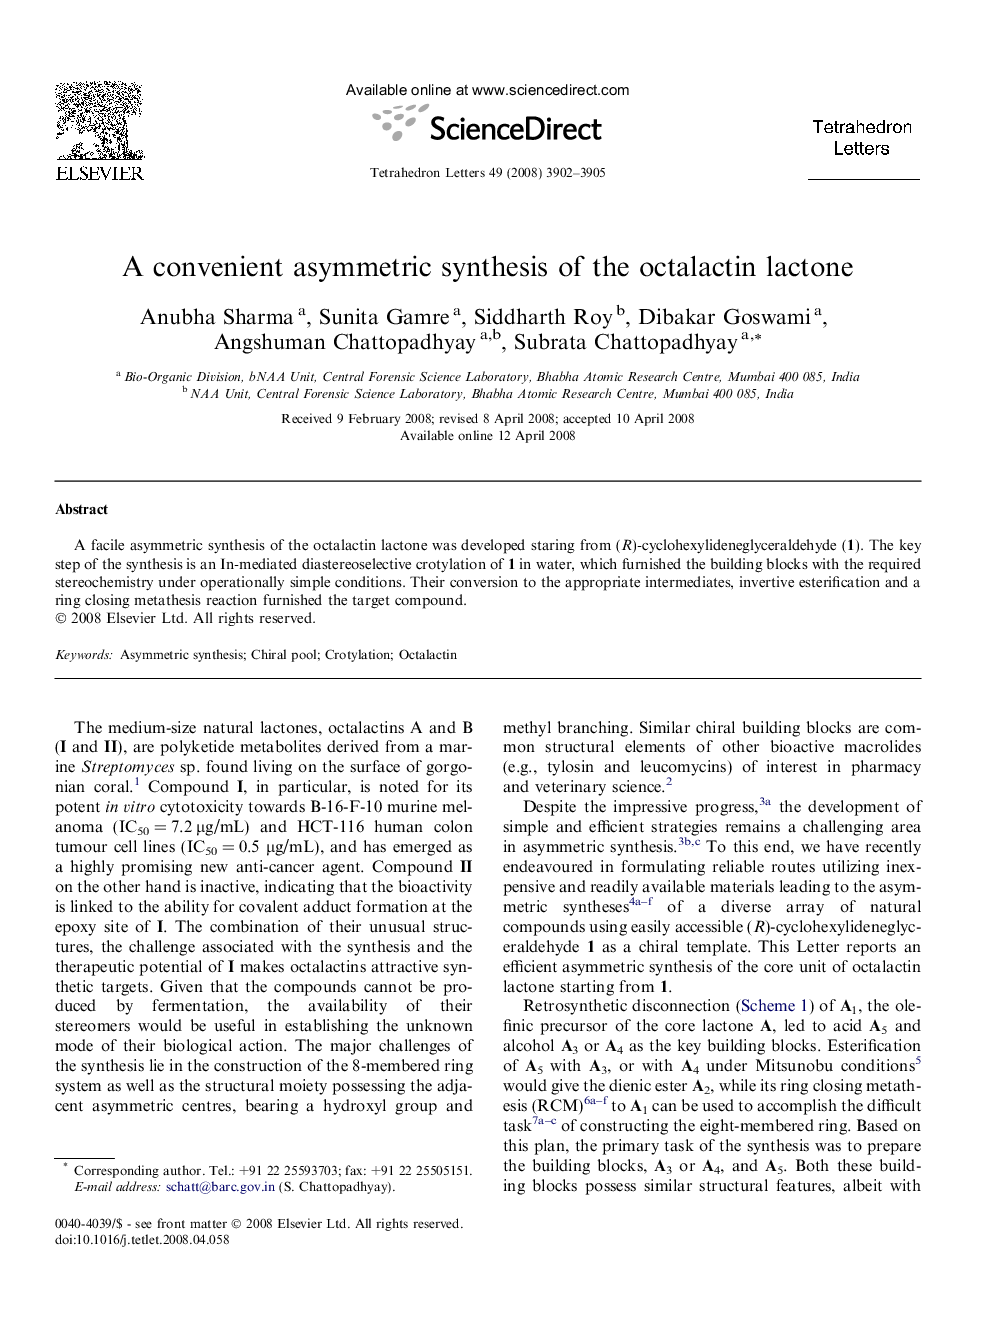 A convenient asymmetric synthesis of the octalactin lactone